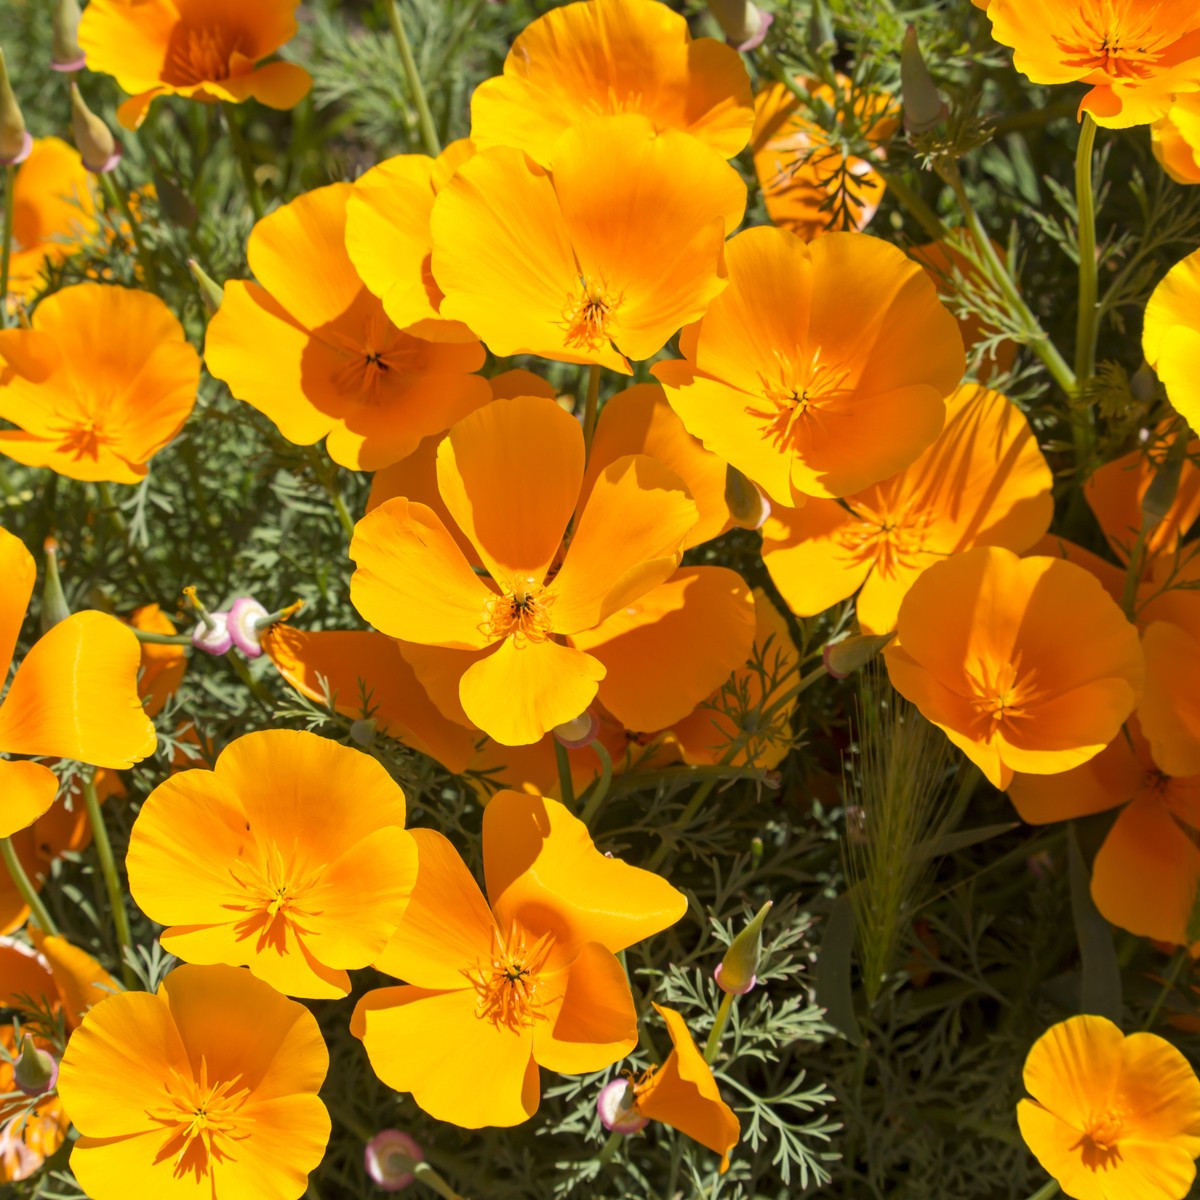 Sluncovka kalifornská oranžová - Eschscholzia californica - semena sluncovky - 450 ks